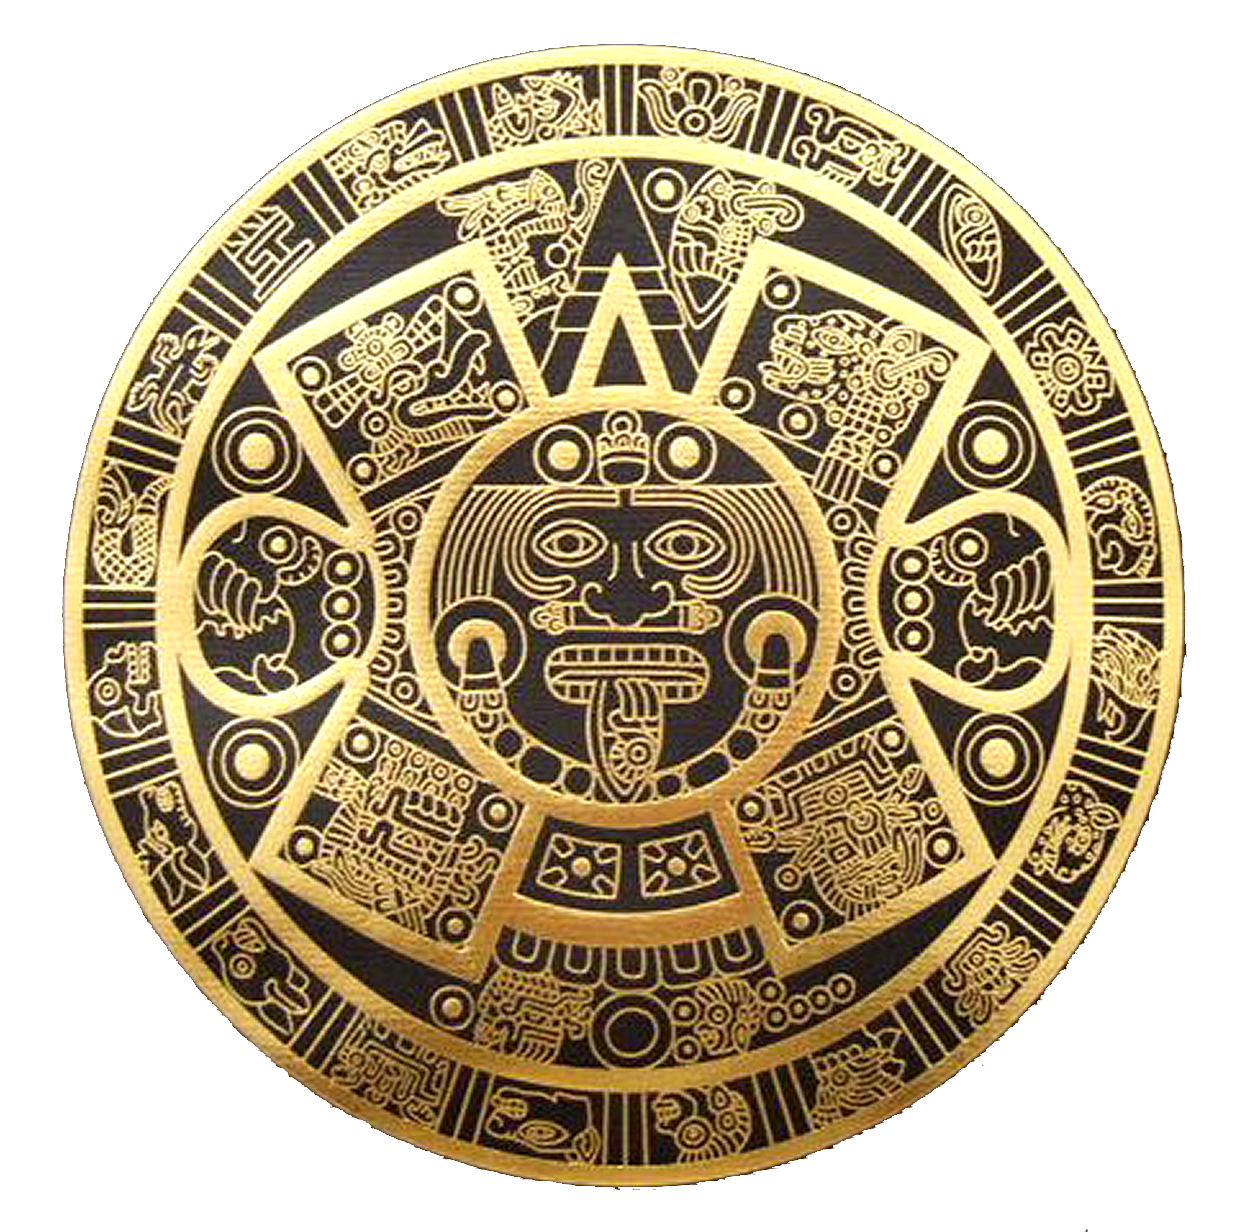 Календарь майя персонажи. Ацтекский календарь Майя. Солнечный календарь ацтеков. Древний Ацтекский календарь. Хааб – Солнечный календарь Майя.